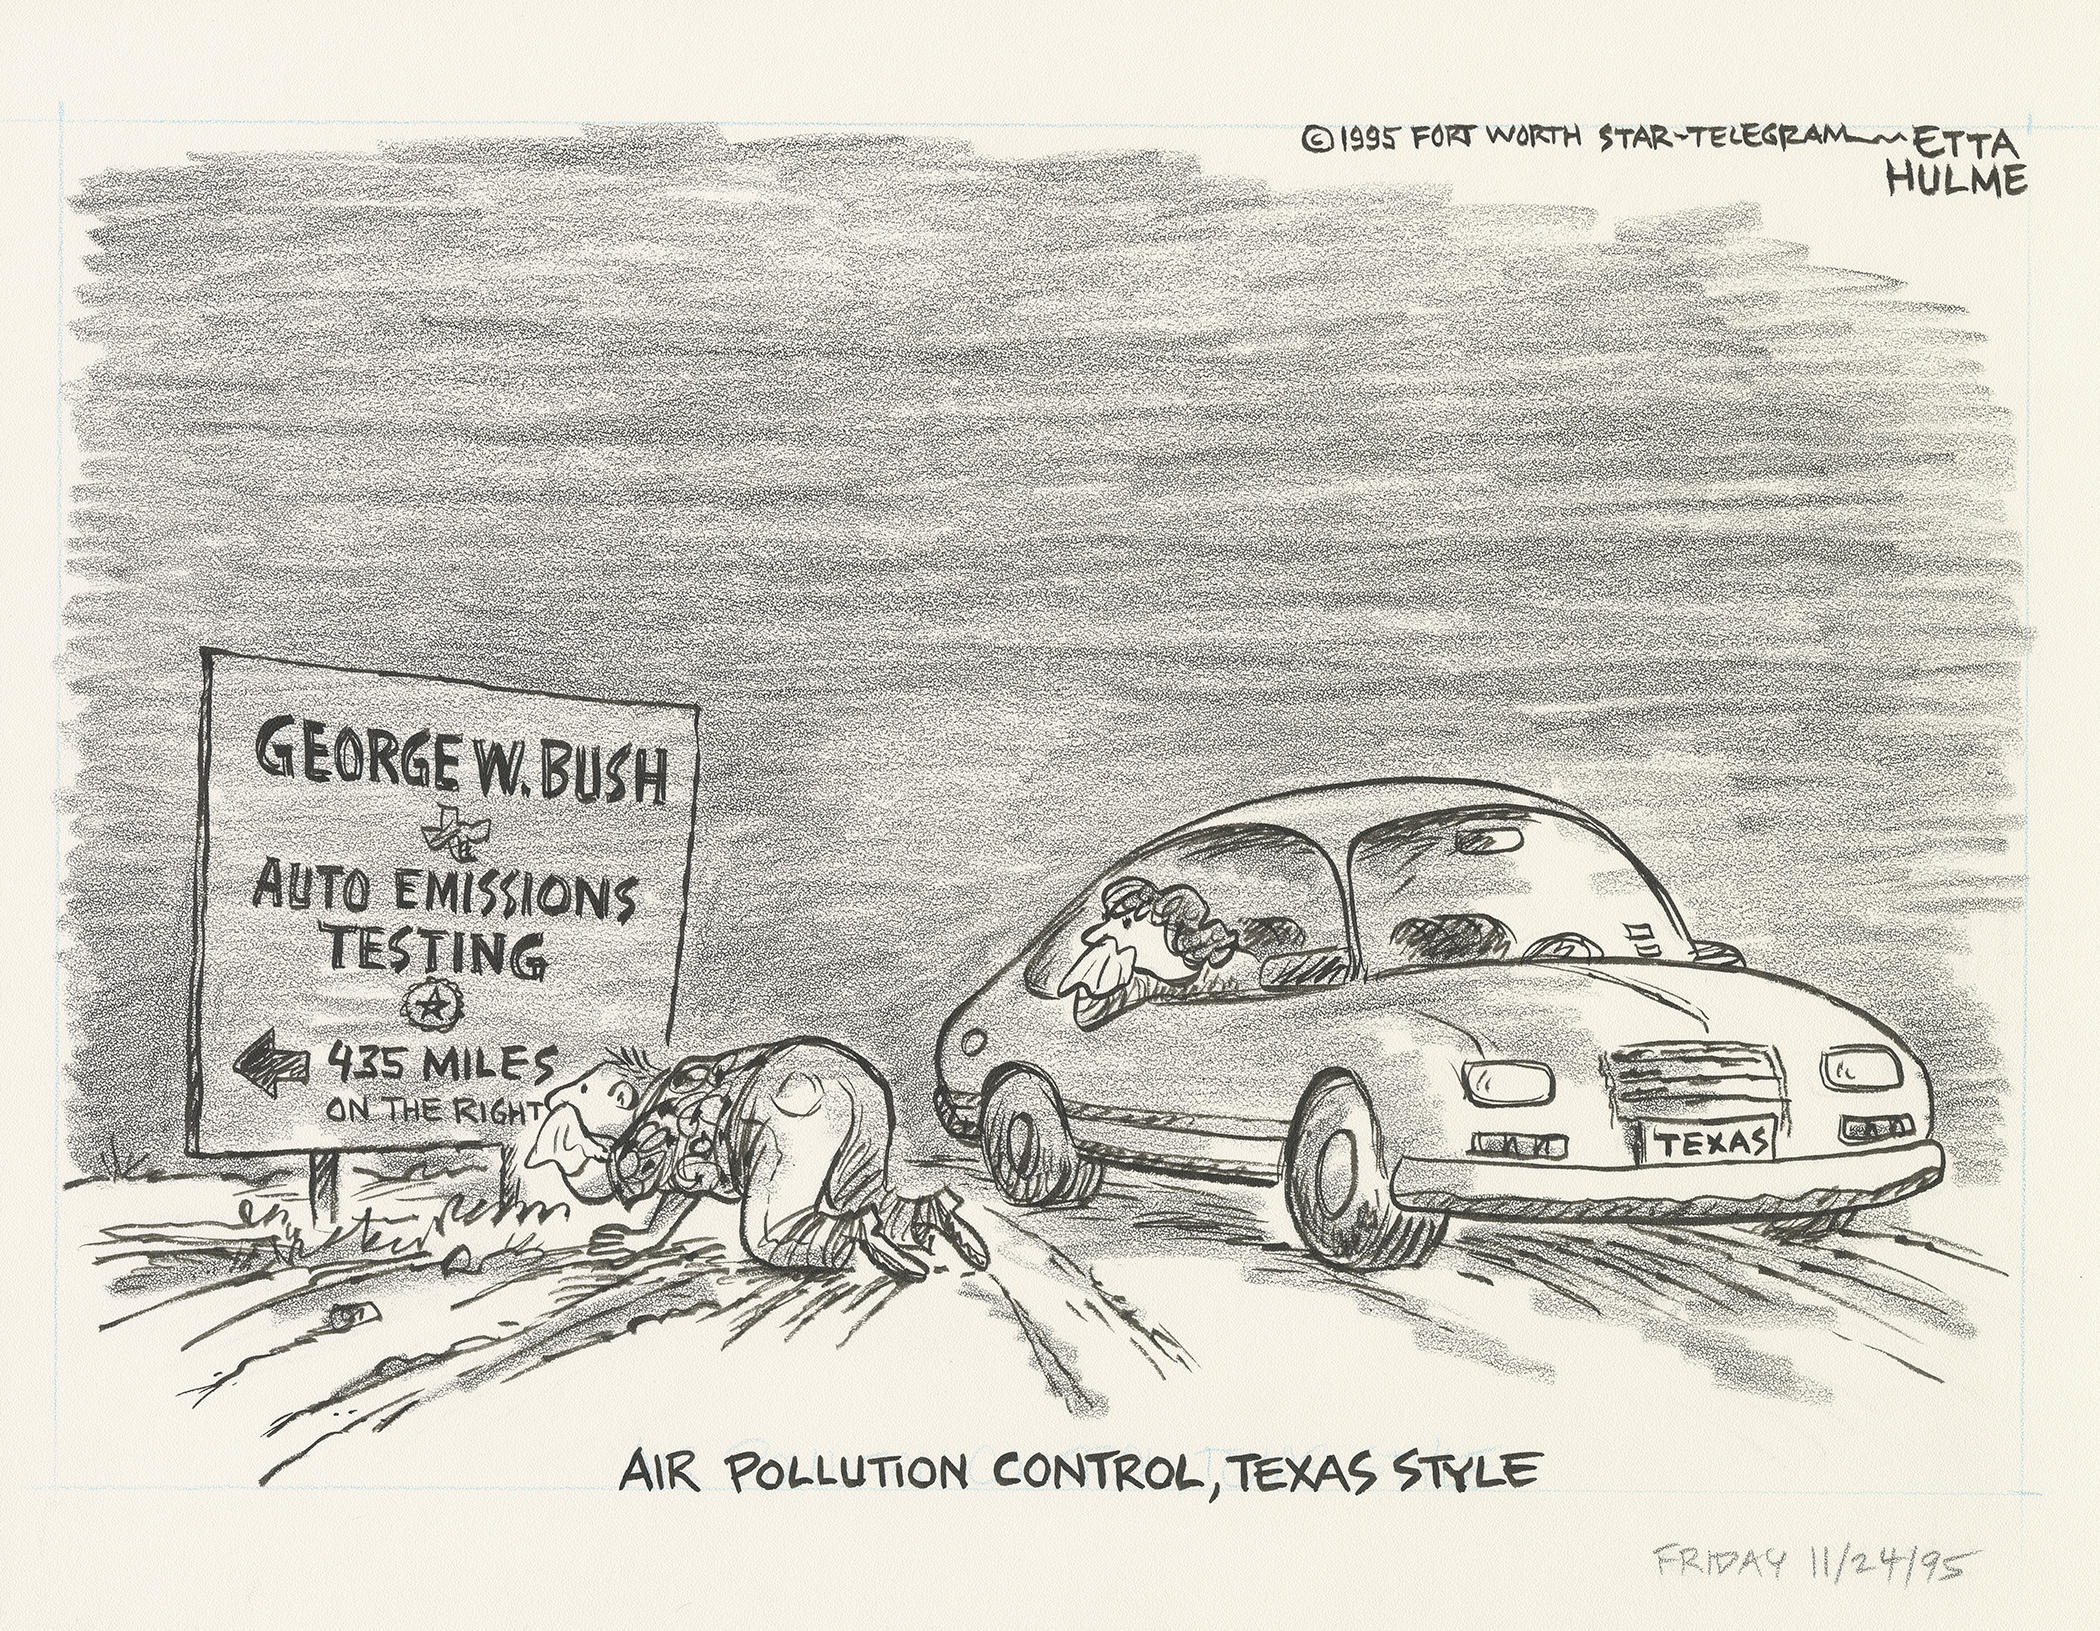 Air pollution control, Texas style